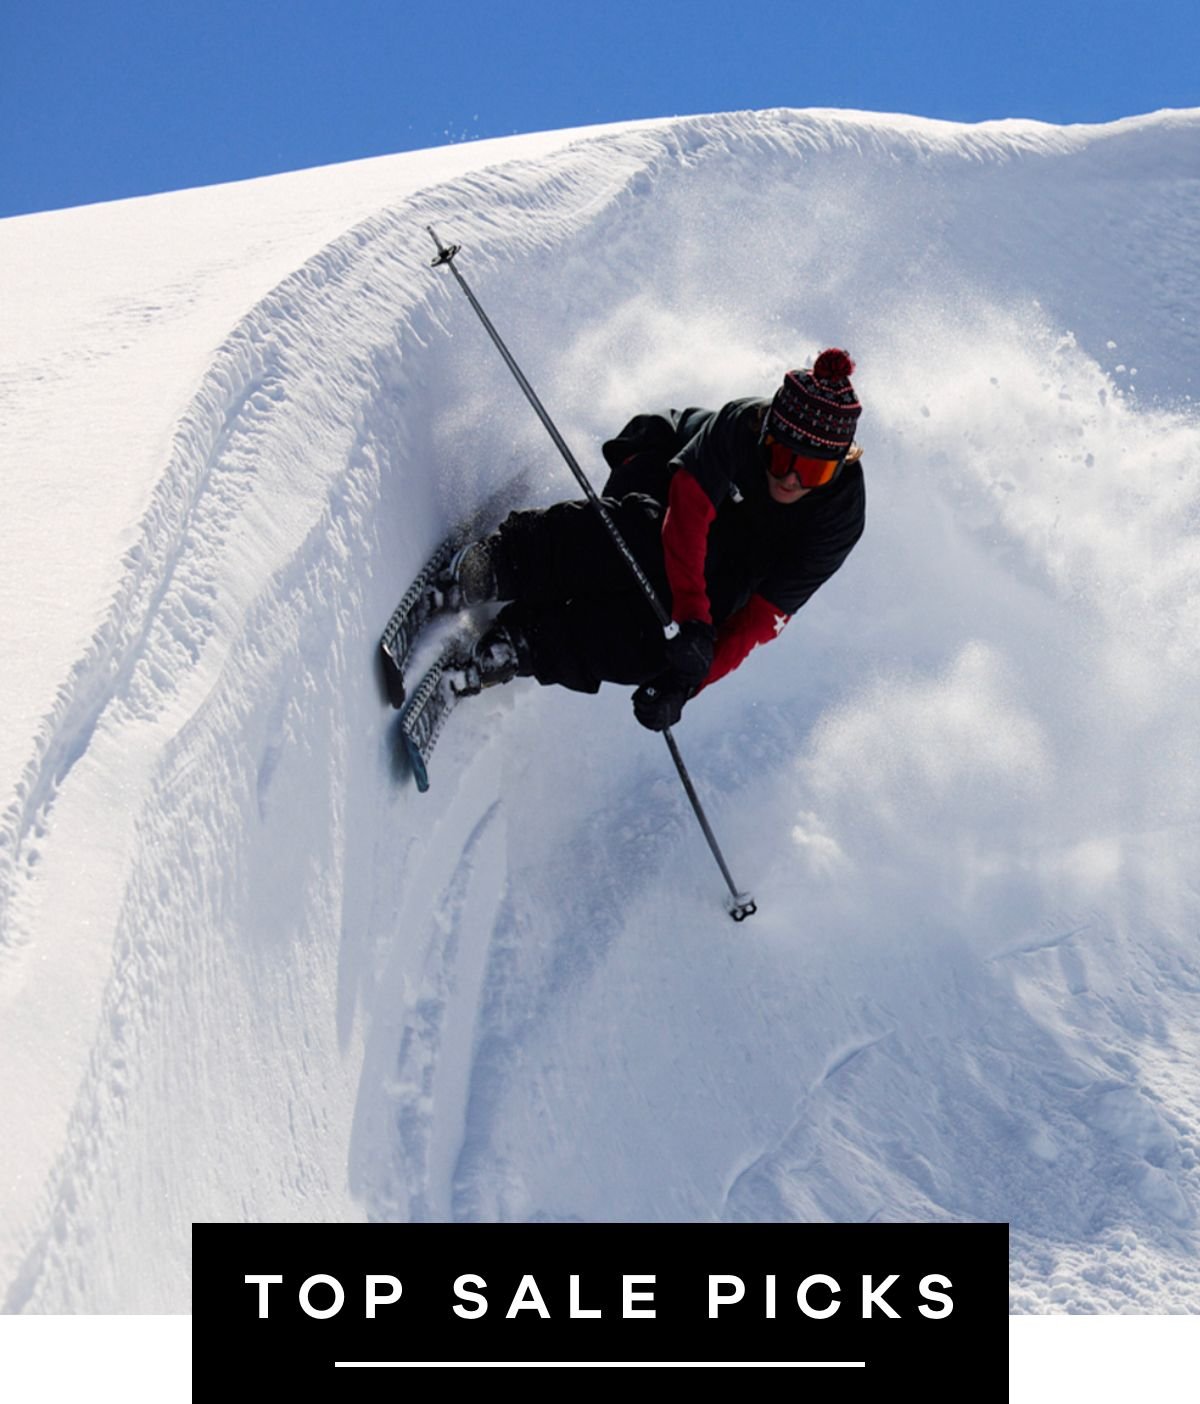 Snow Sale Top Picks Snowboard Image